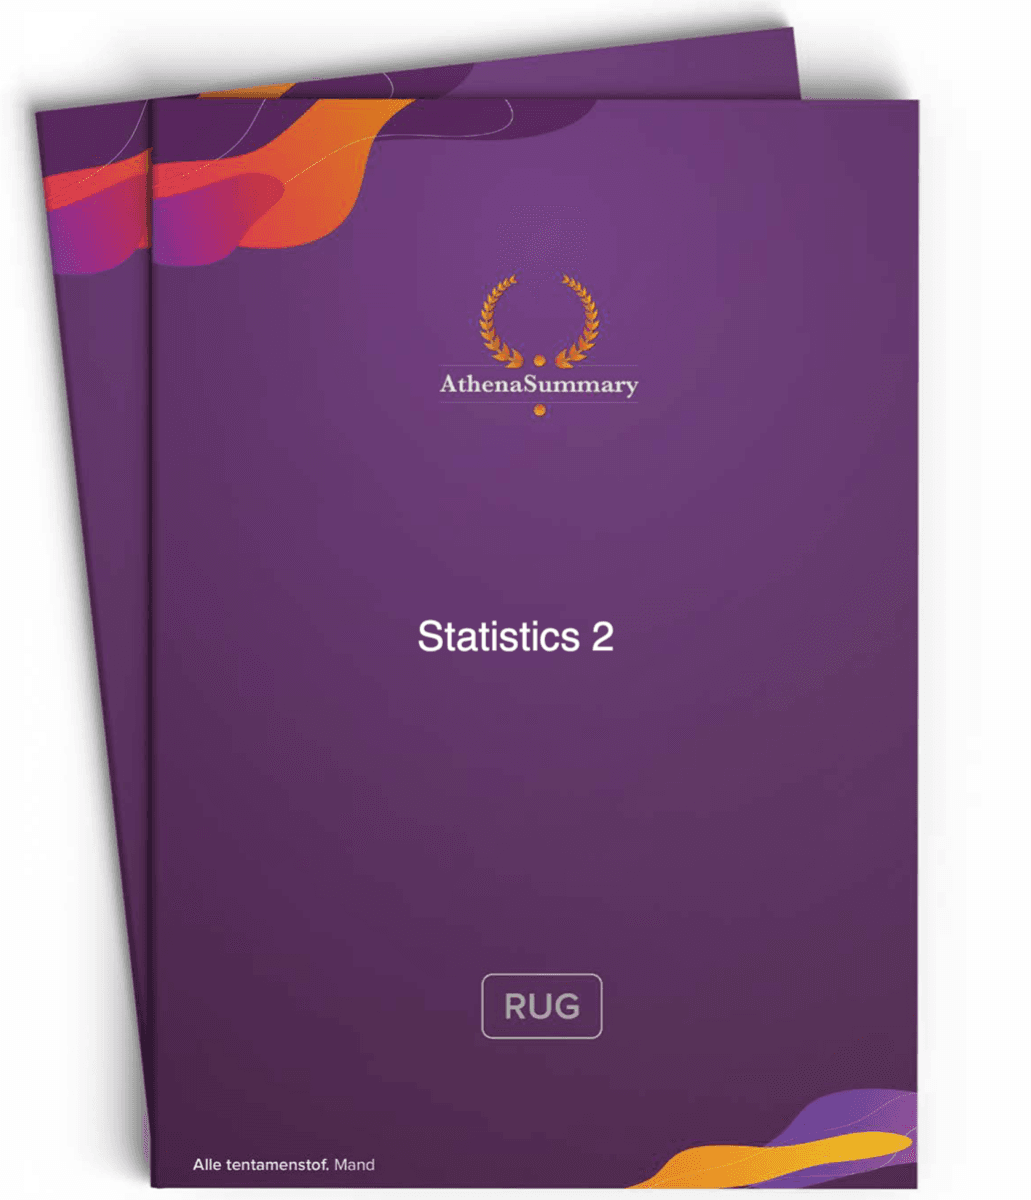 Literature summary: Statistics II